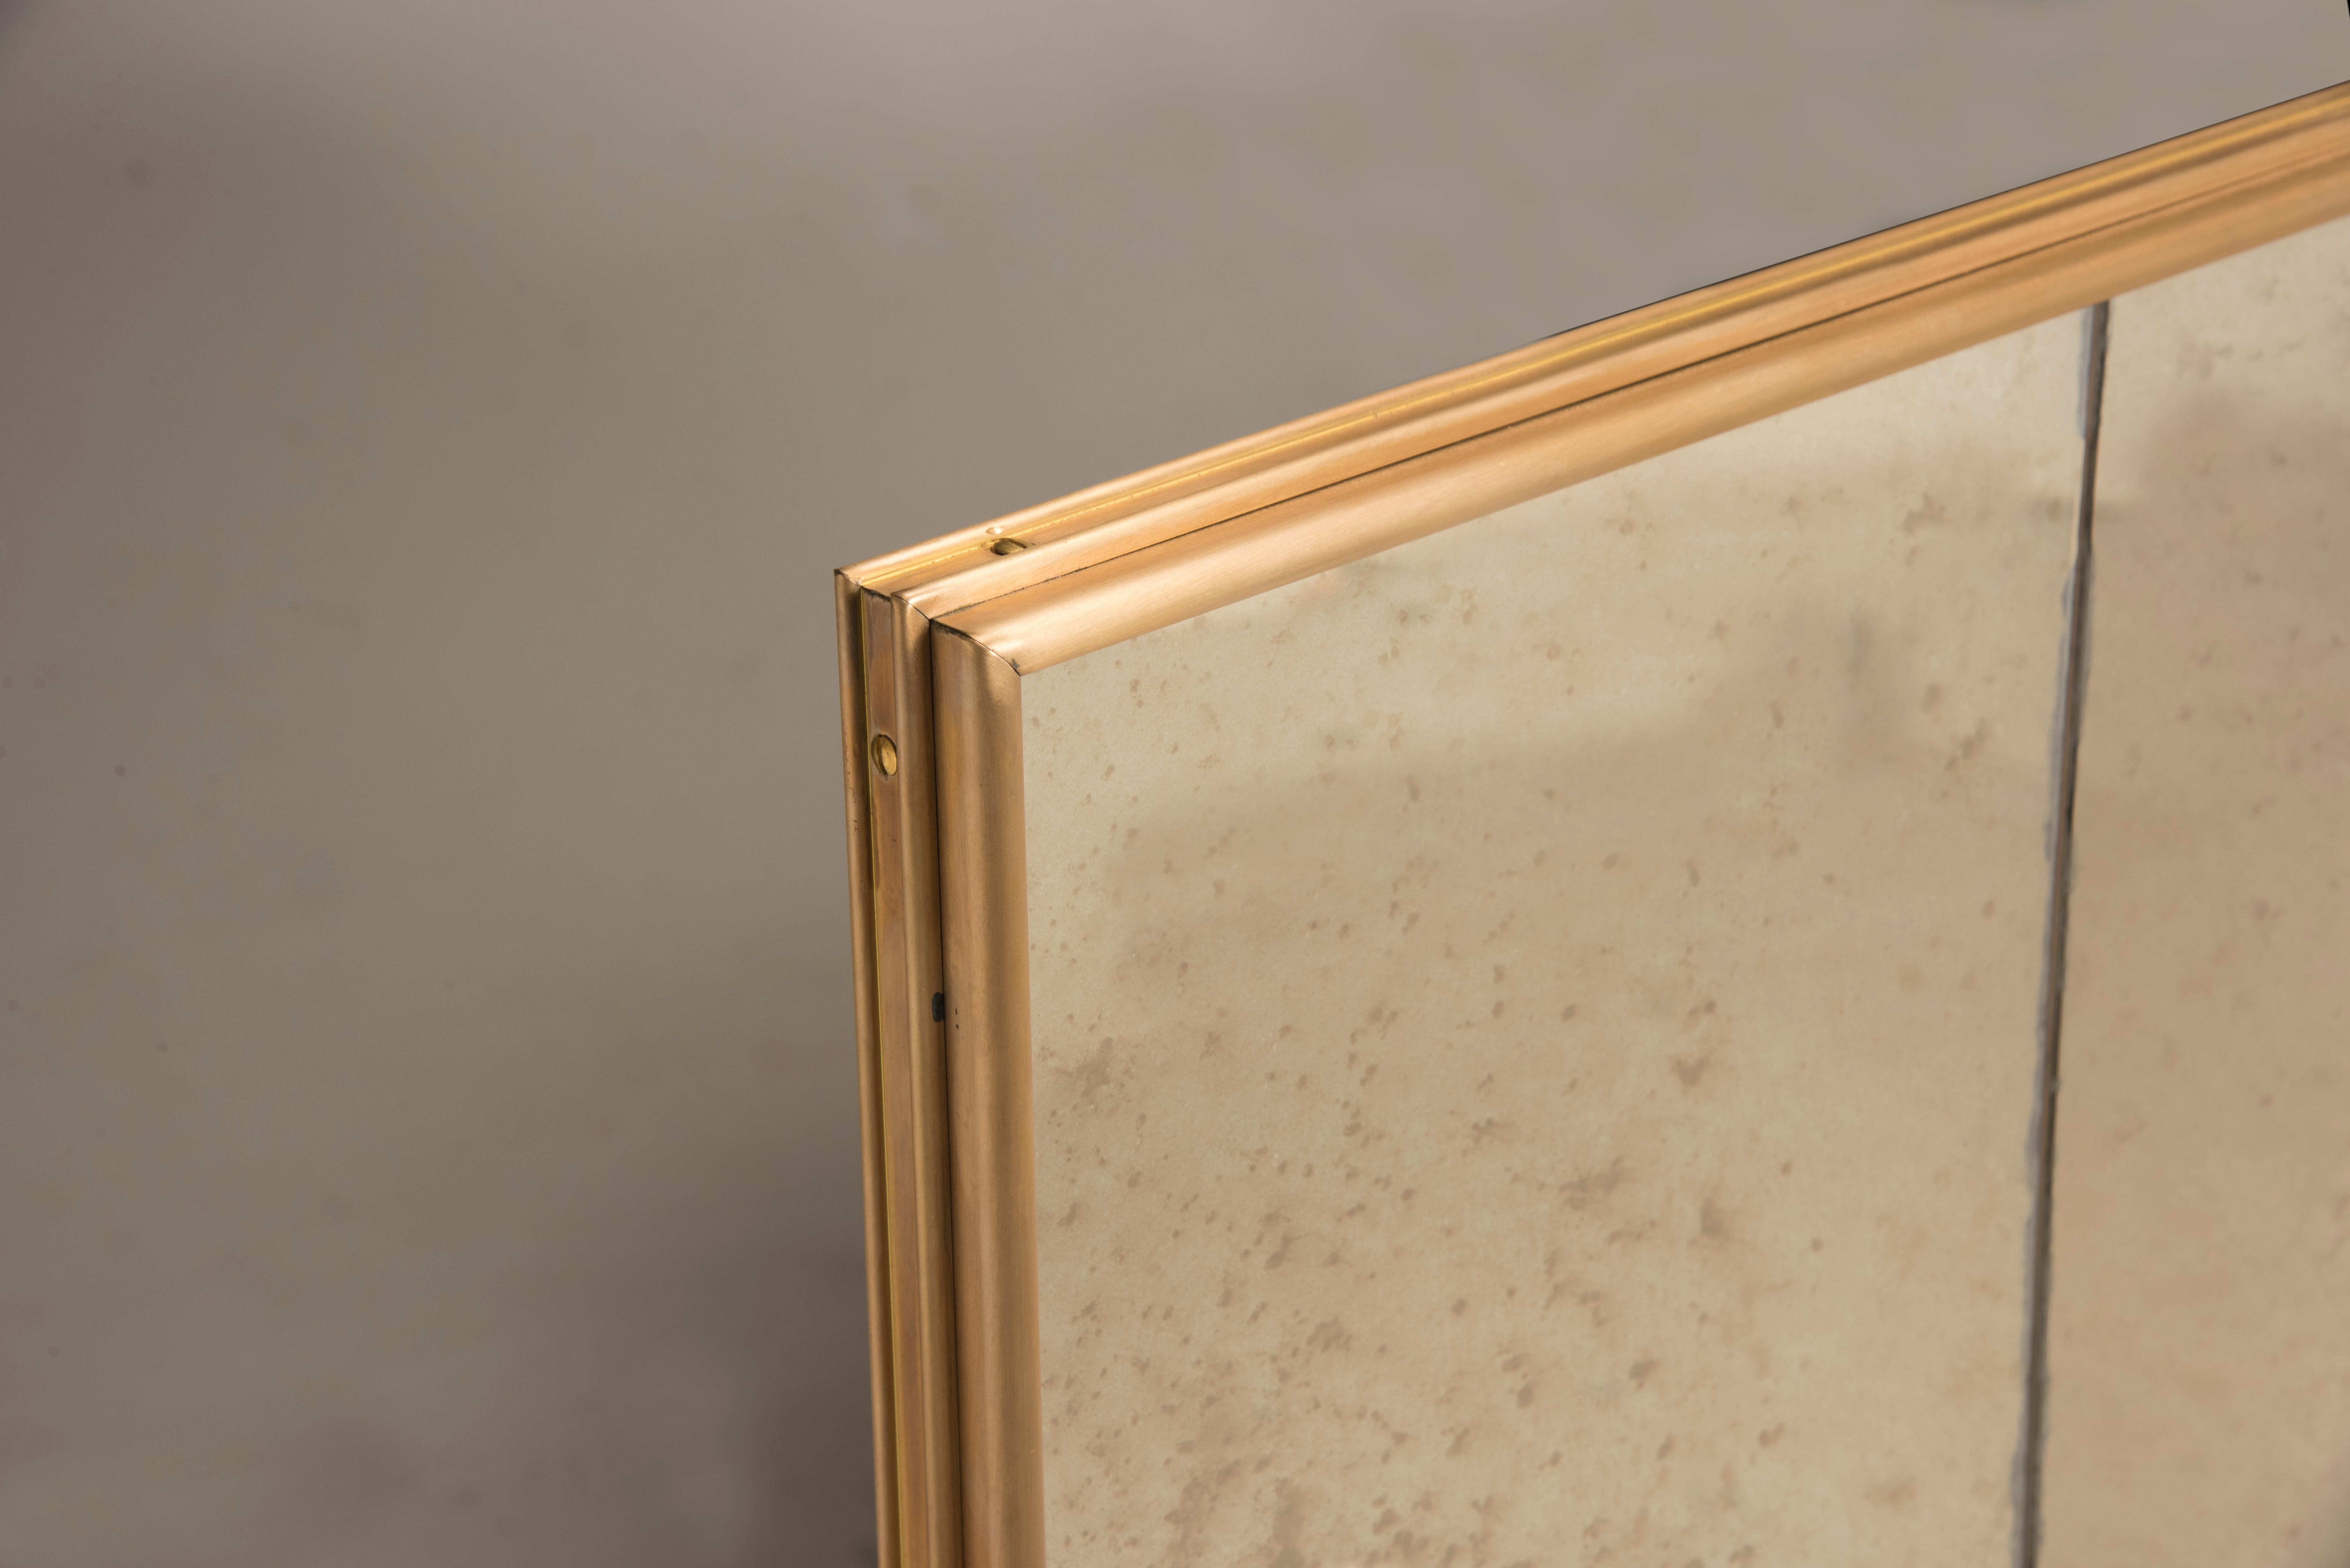 Contemporary 21st Century Rectangular Art Deco Style Paneled Brass Classic Mirror 120 x 220cm For Sale